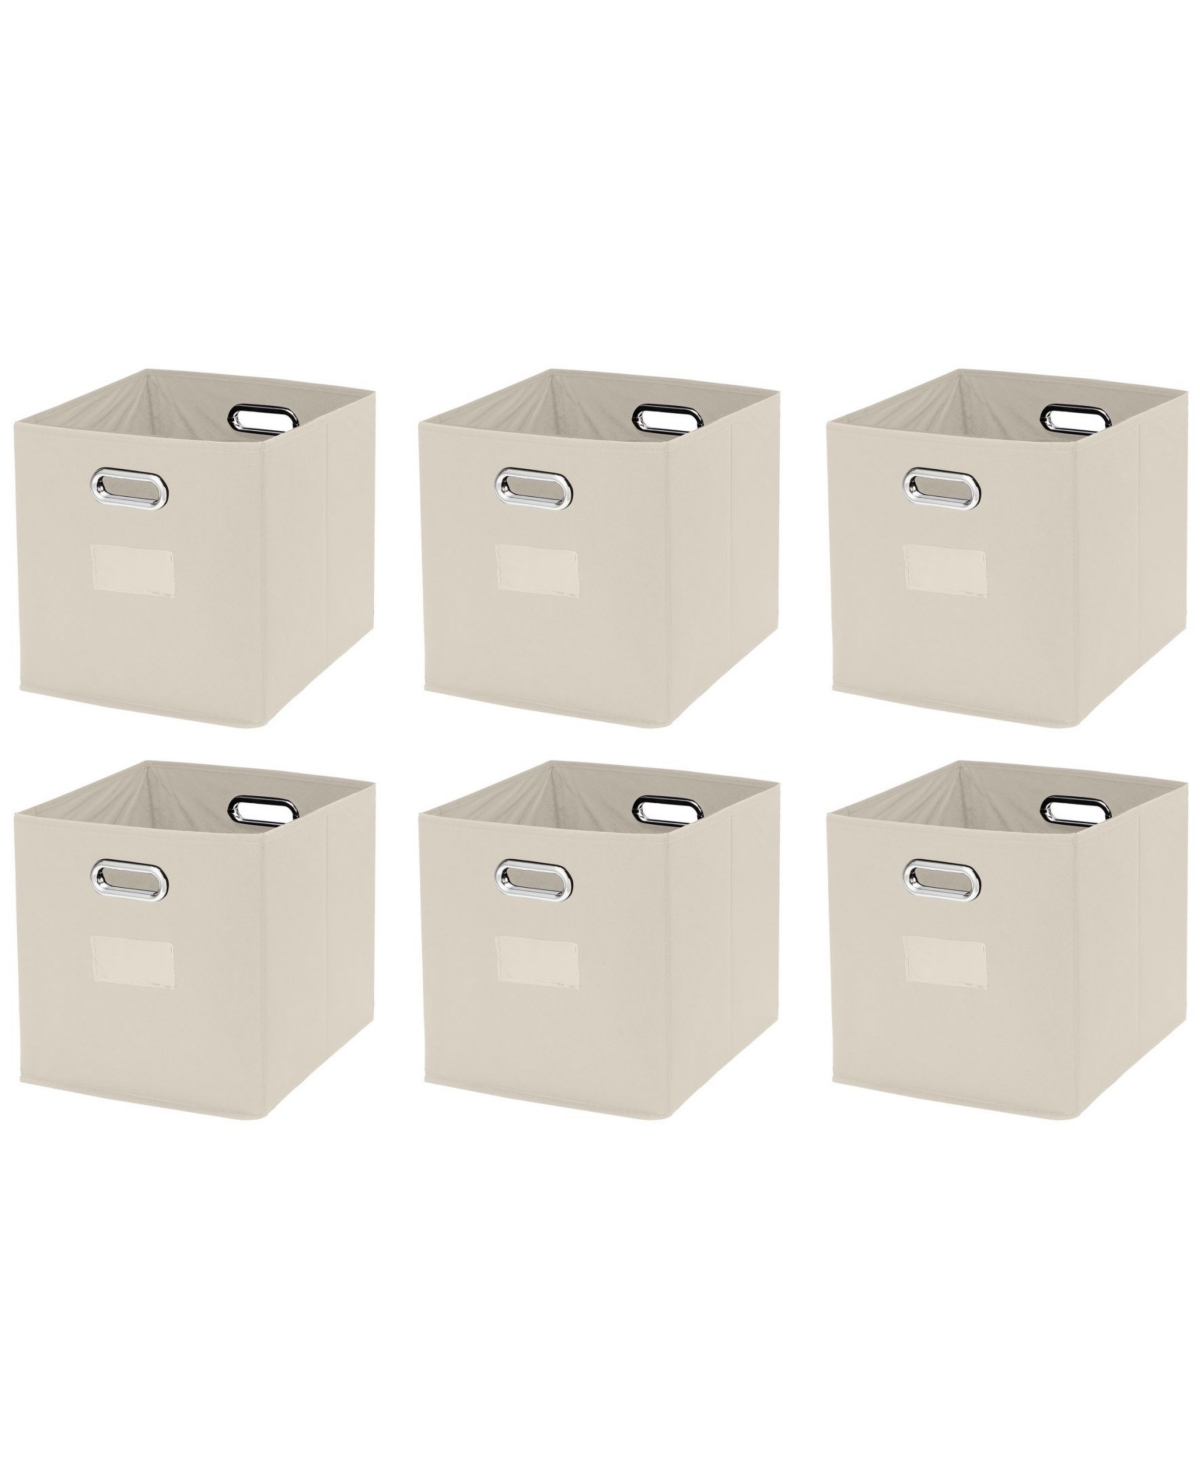 6-Pack. Folding Storage Bins - Teal